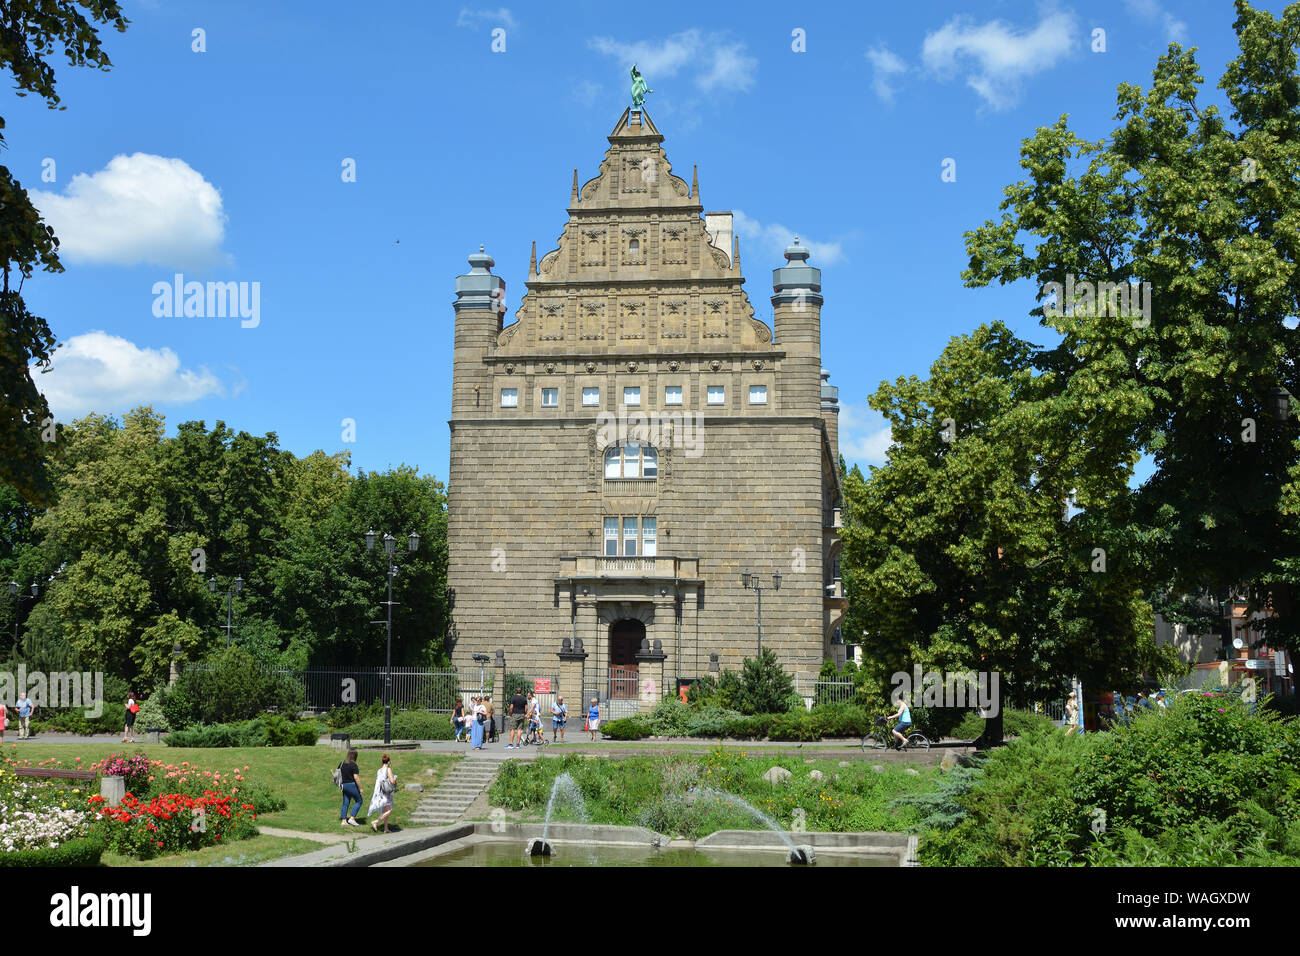 Nicolaus Copernicus University in Torun - Poland. Stock Photo